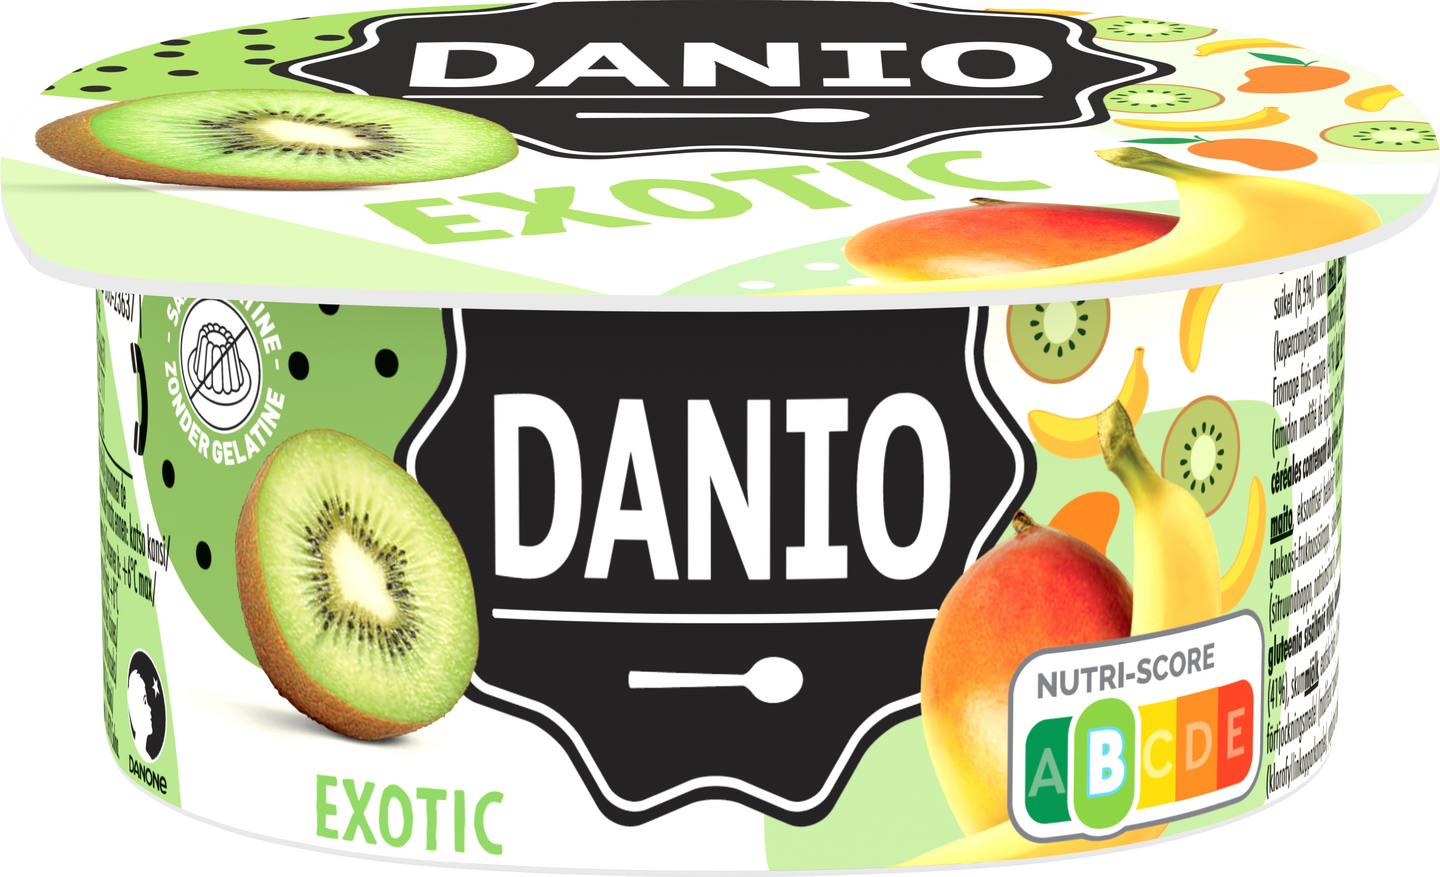 Danone Danio rahka 165g eksoottiset hedelmät